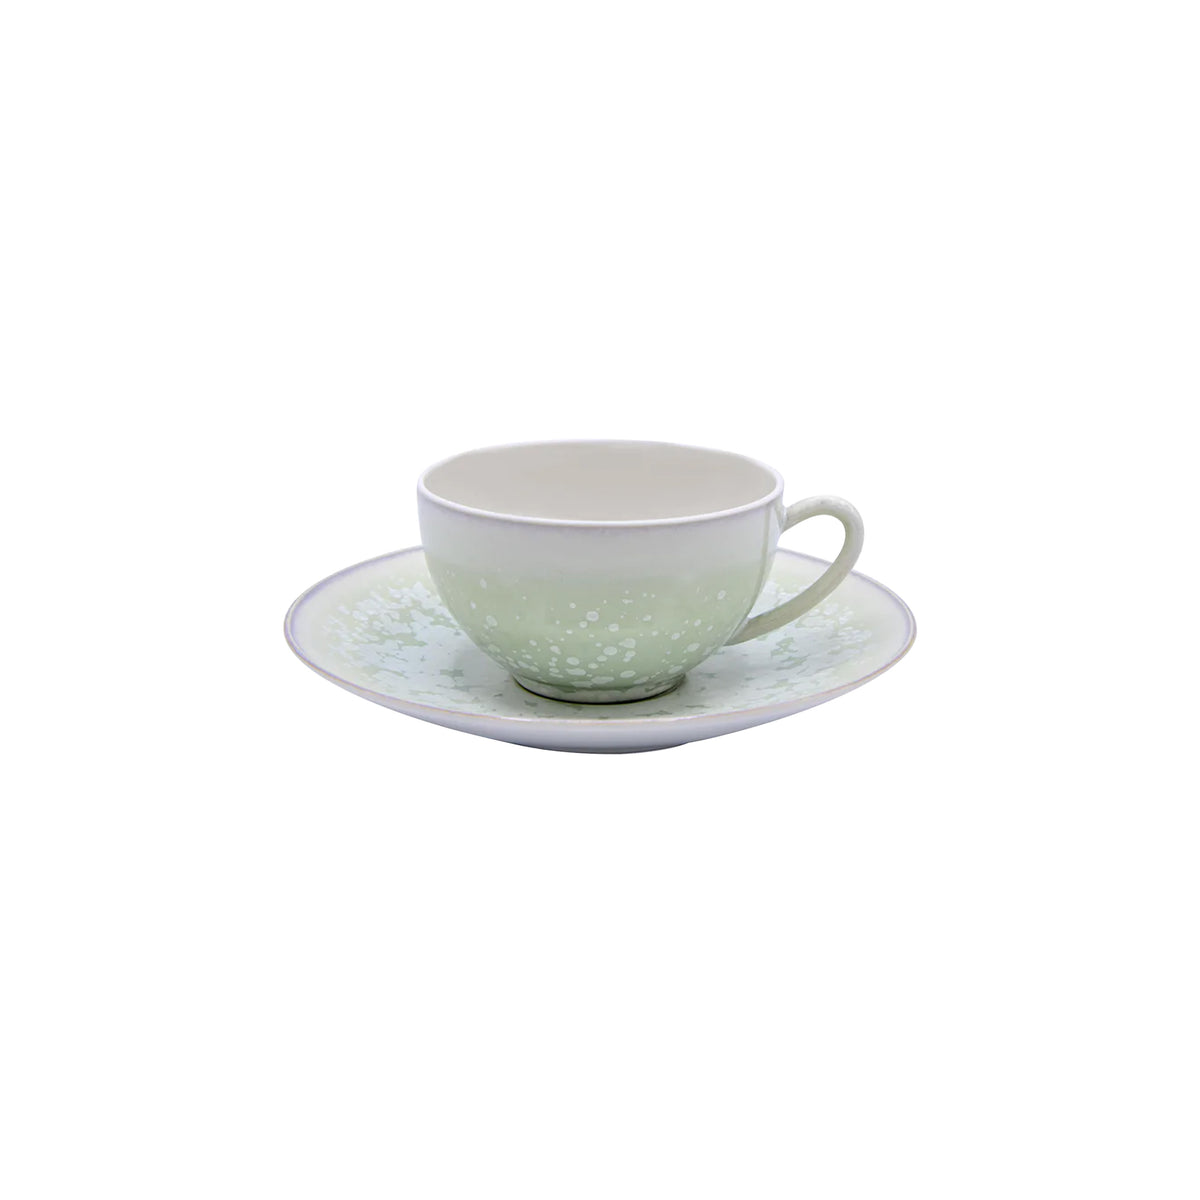 SONG Almond - Tea set (cup & saucer)